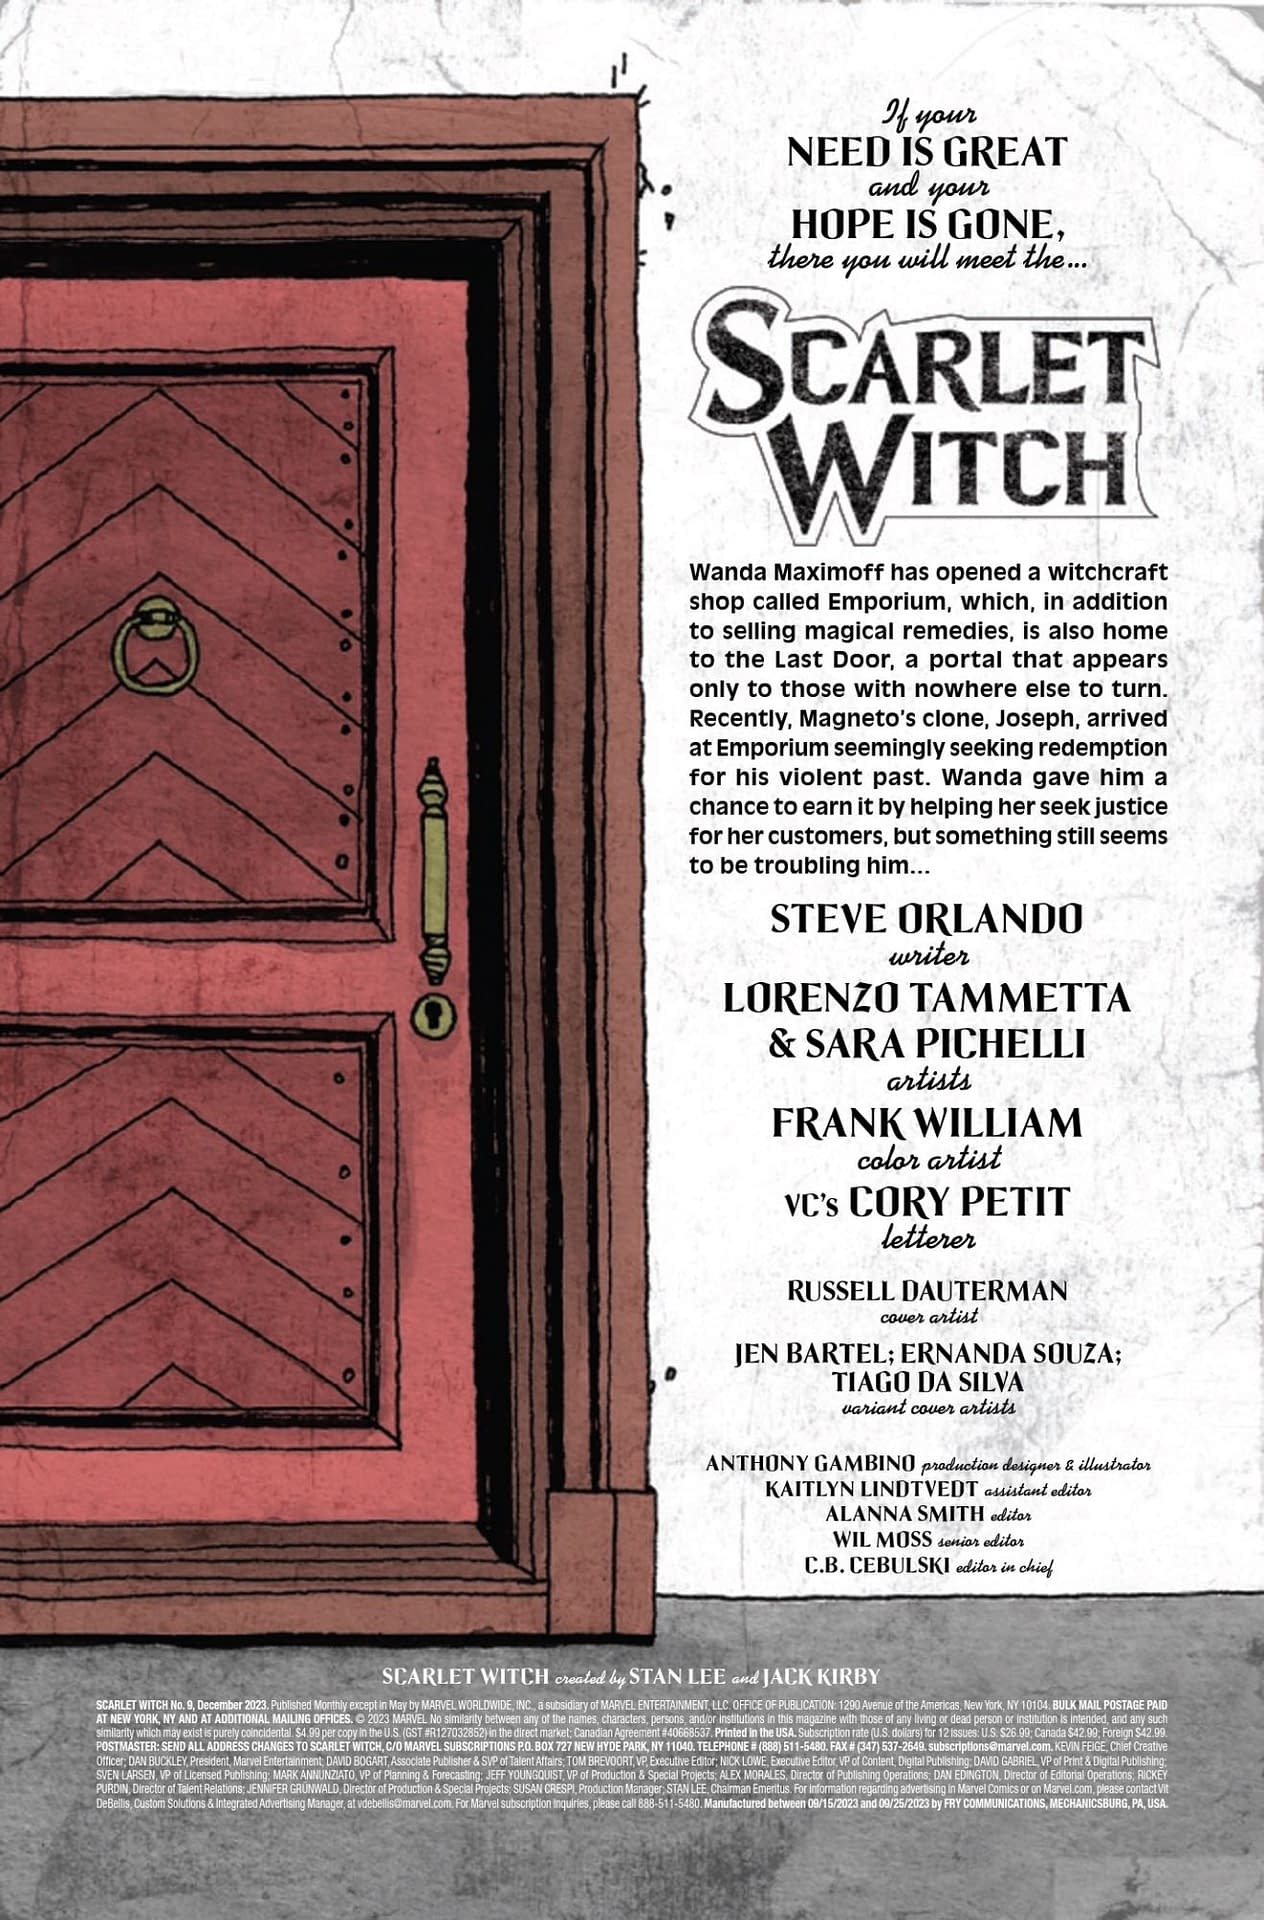 HERO of The HOPELESS! The Scarlet Witch/Wanda Maximoff